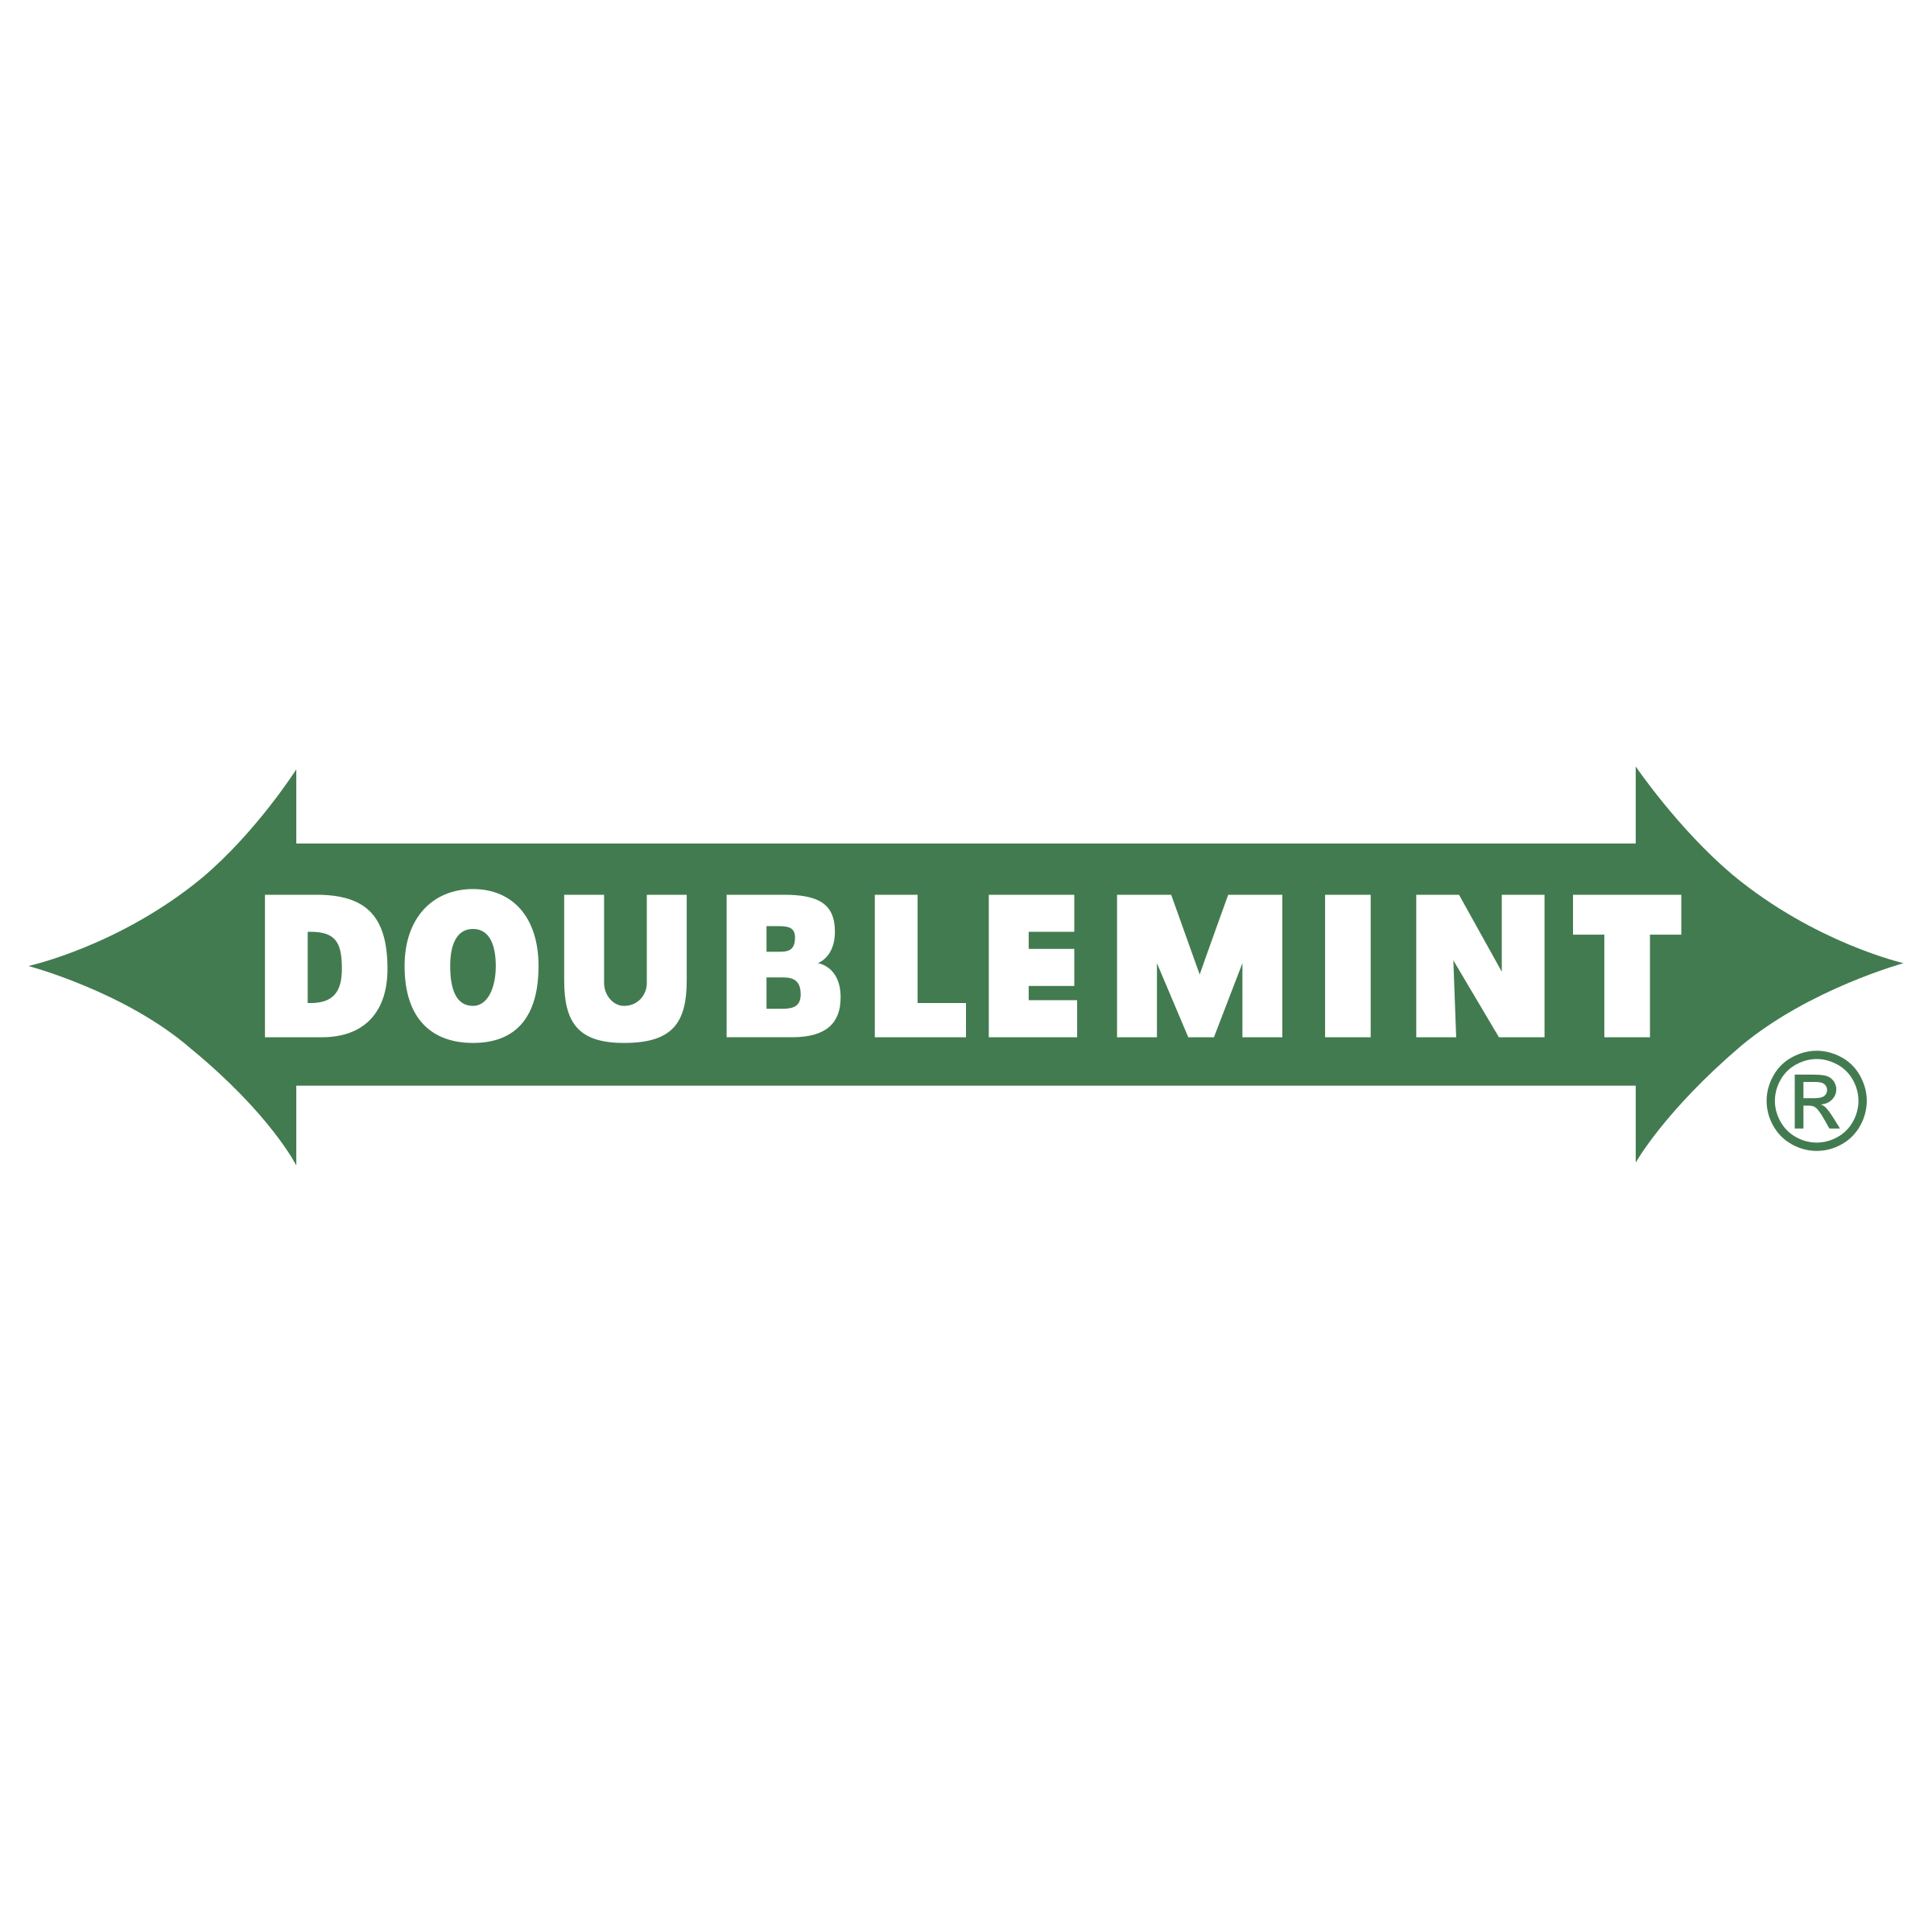 Doublemint Logo - Doublemint Logo PNG Transparent & SVG Vector - Freebie Supply